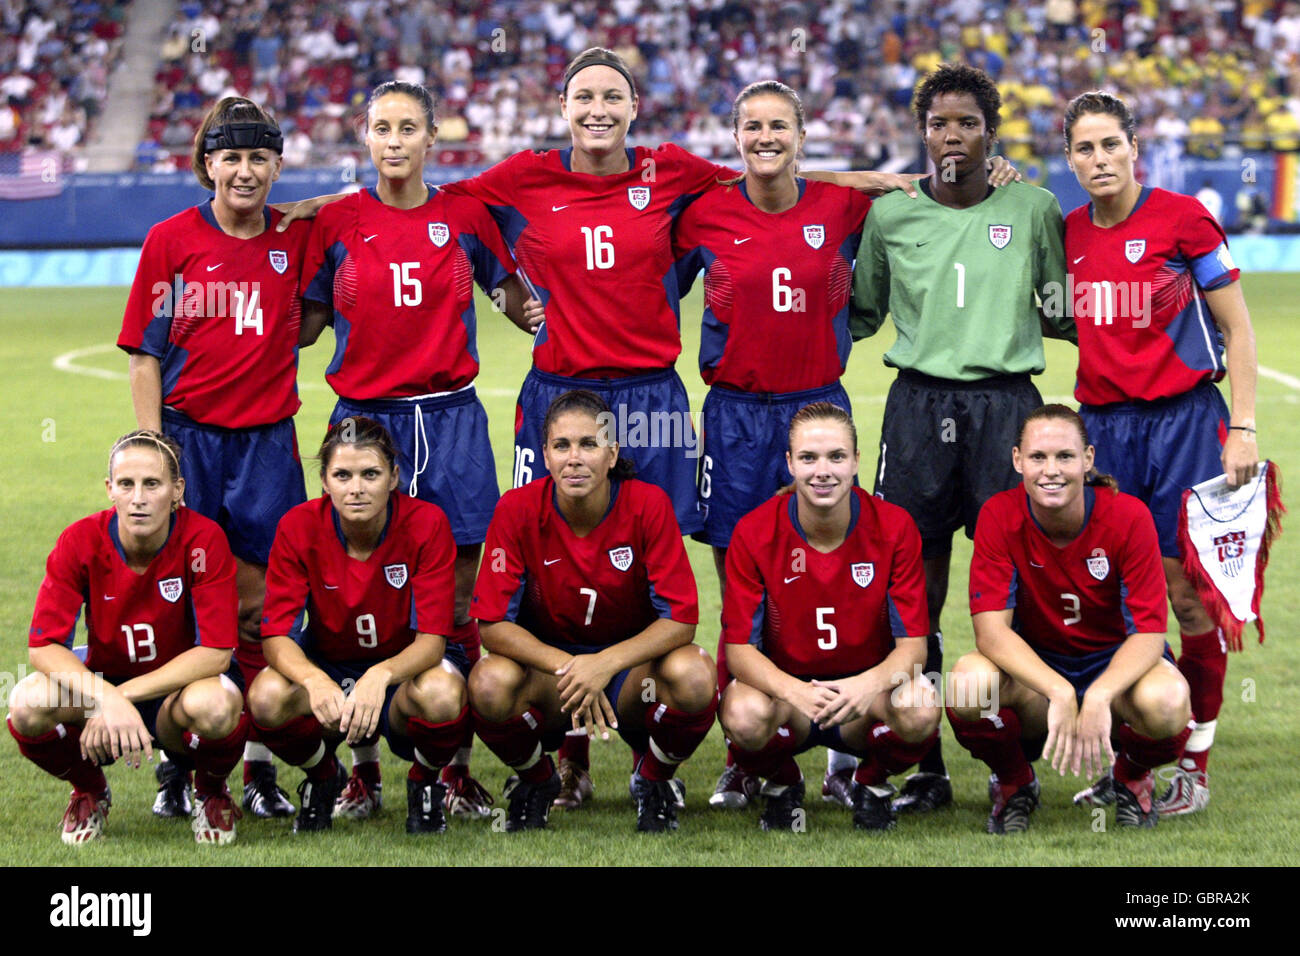 Soccer - Athens Olympic Games 2004 - Women's Final - USA v Brazil. USA team group Stock Photo